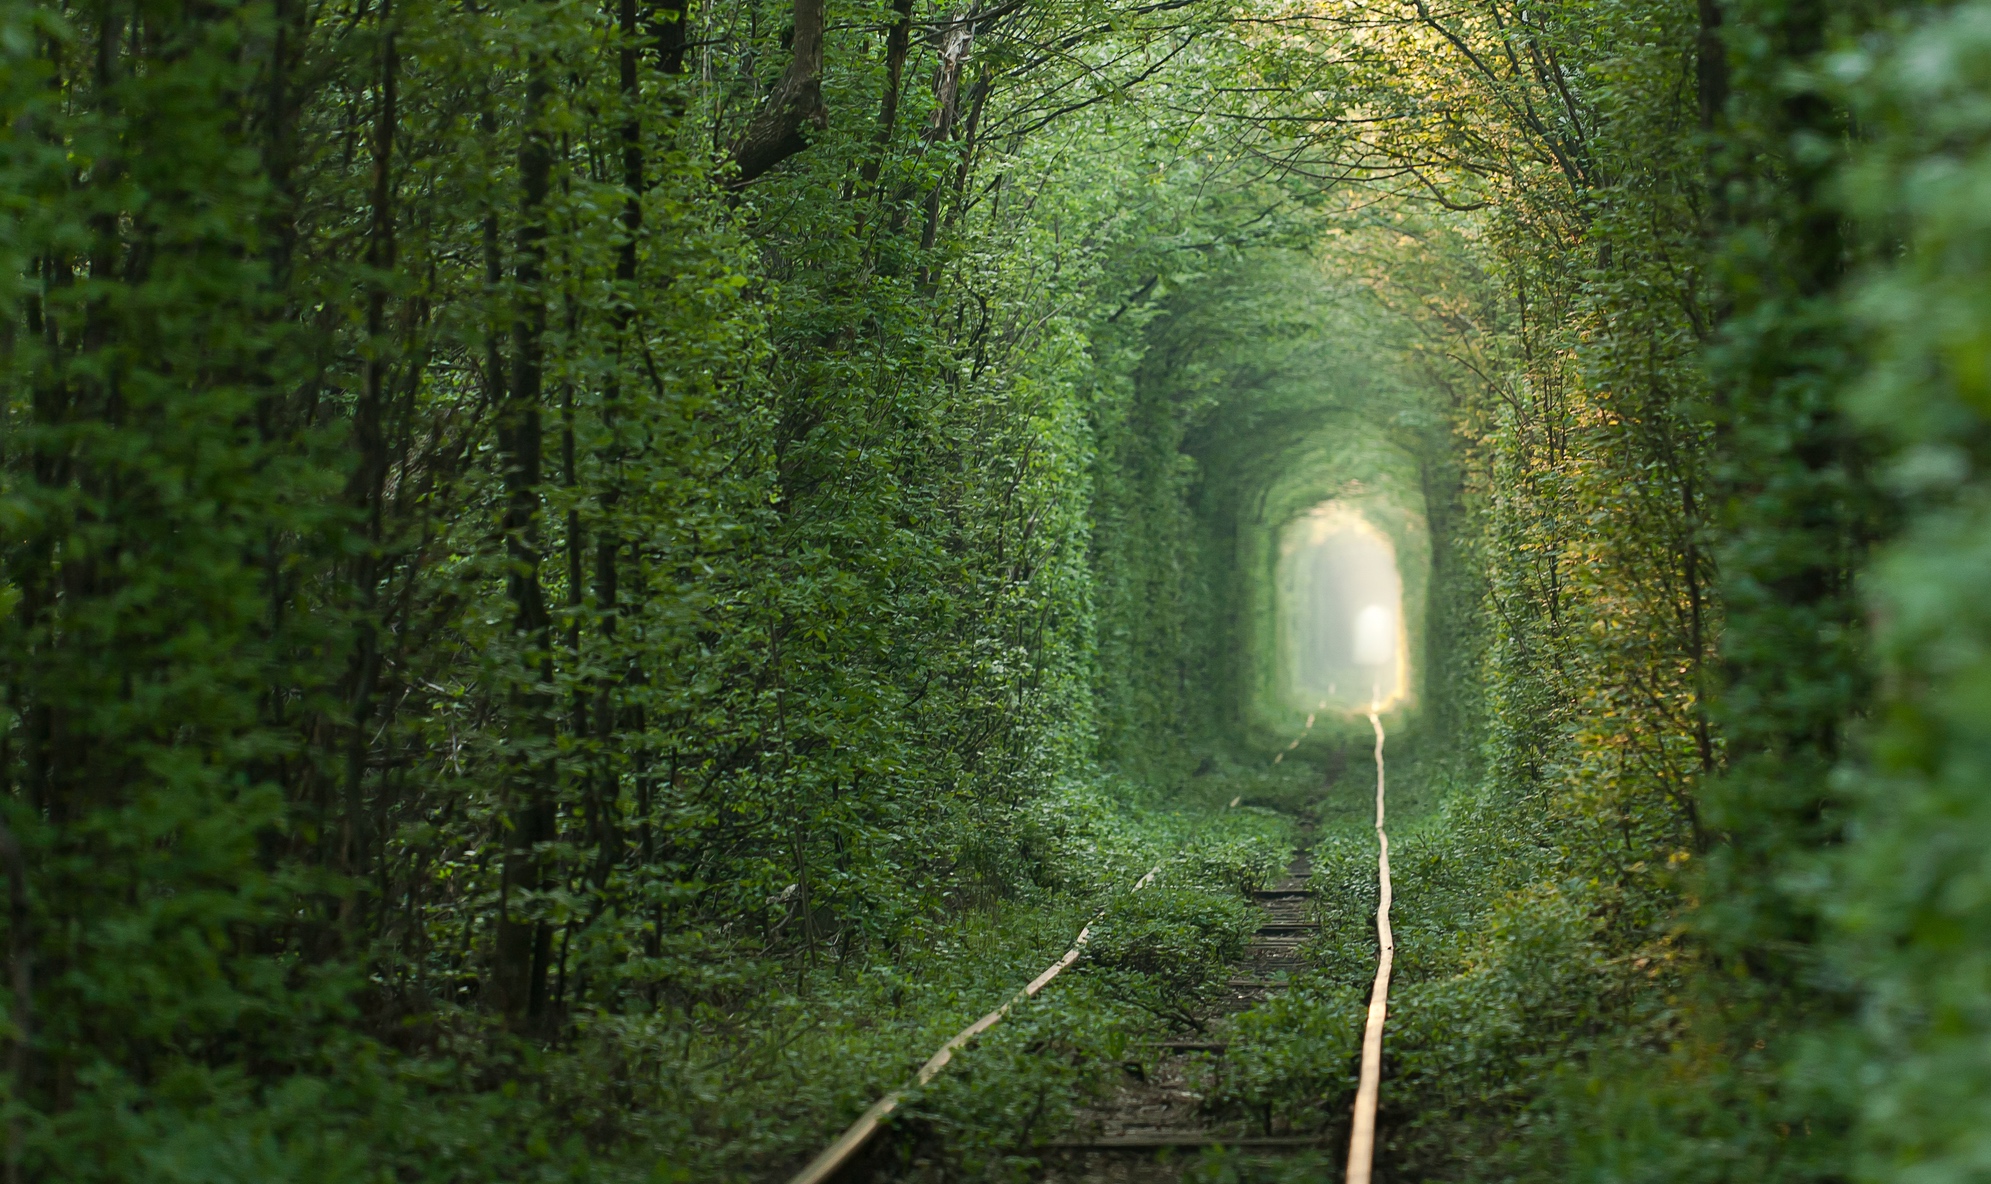 Green tunnel.